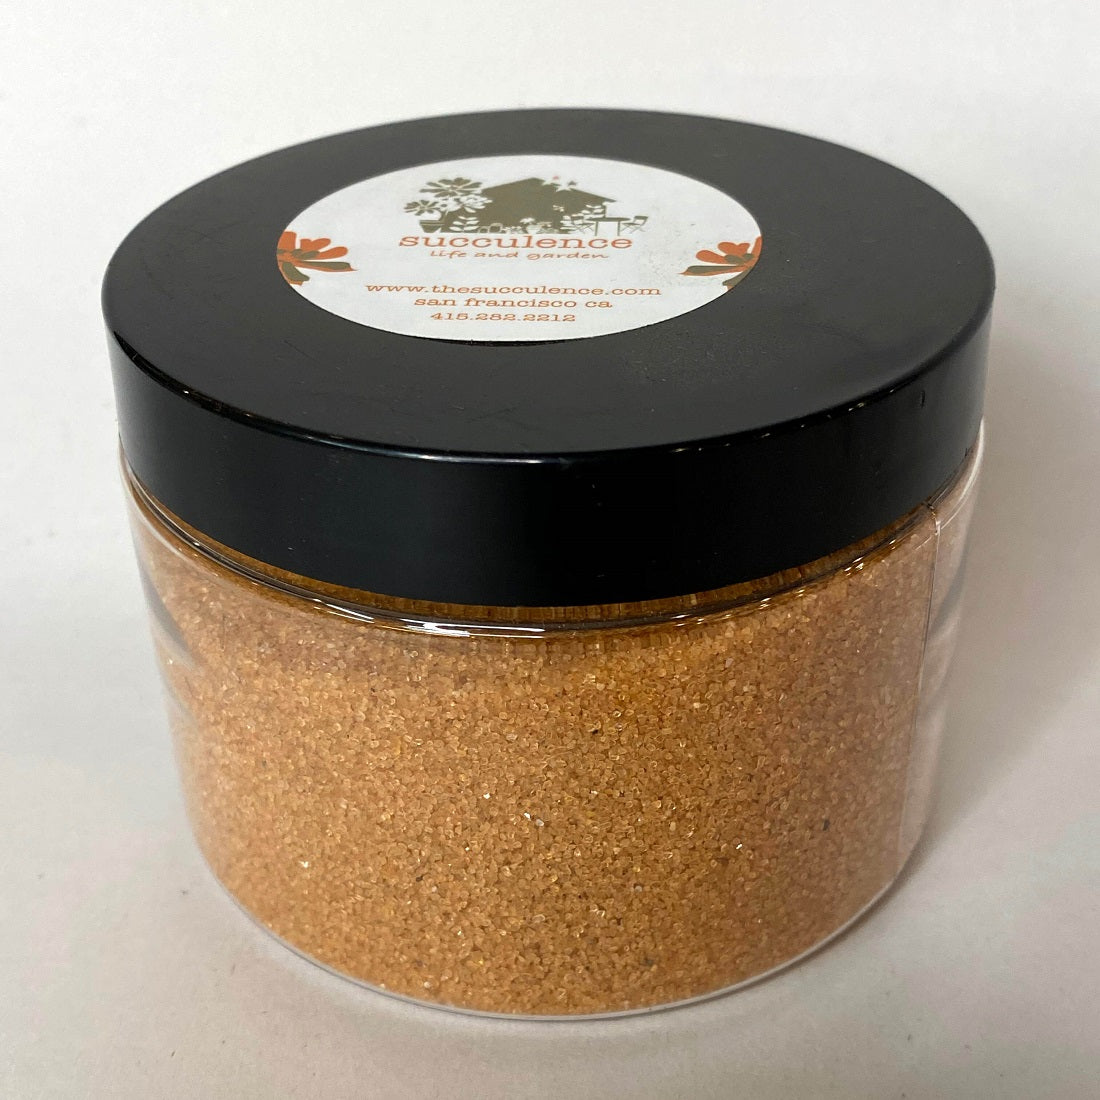 Marigold Sand: a full lidded jar holds coarse yellow-orange sand.